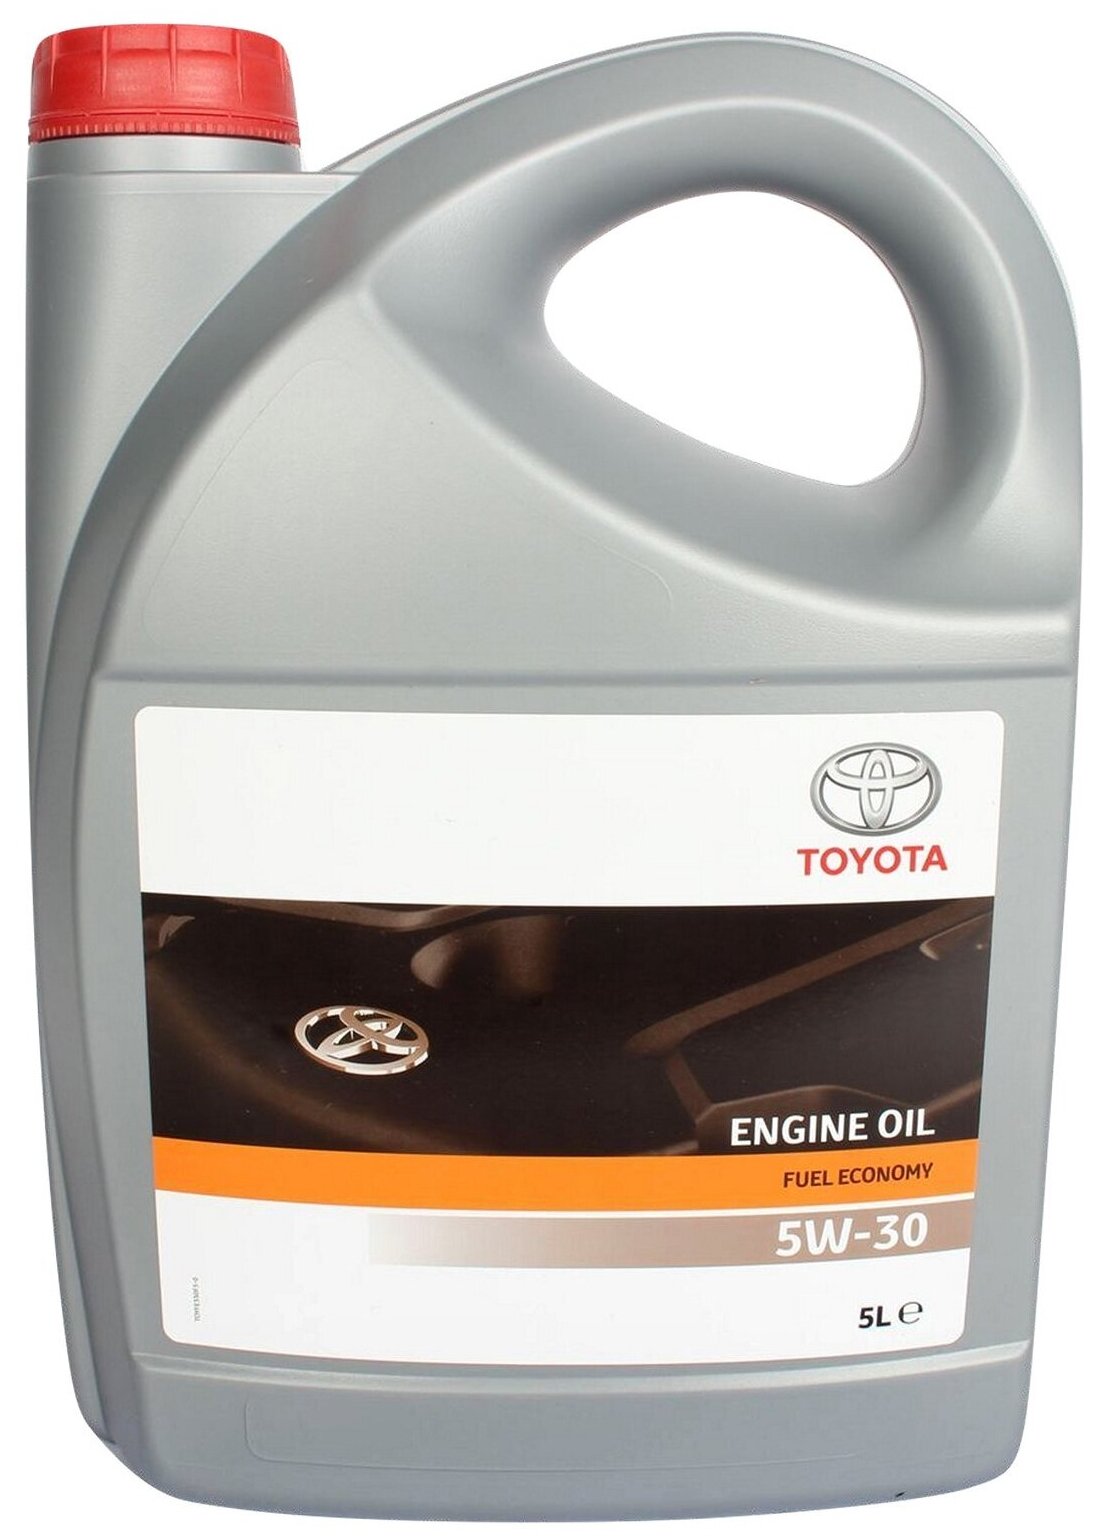 Синтетическое моторное масло TOYOTA Fuel Economy 5W-30, 5 л